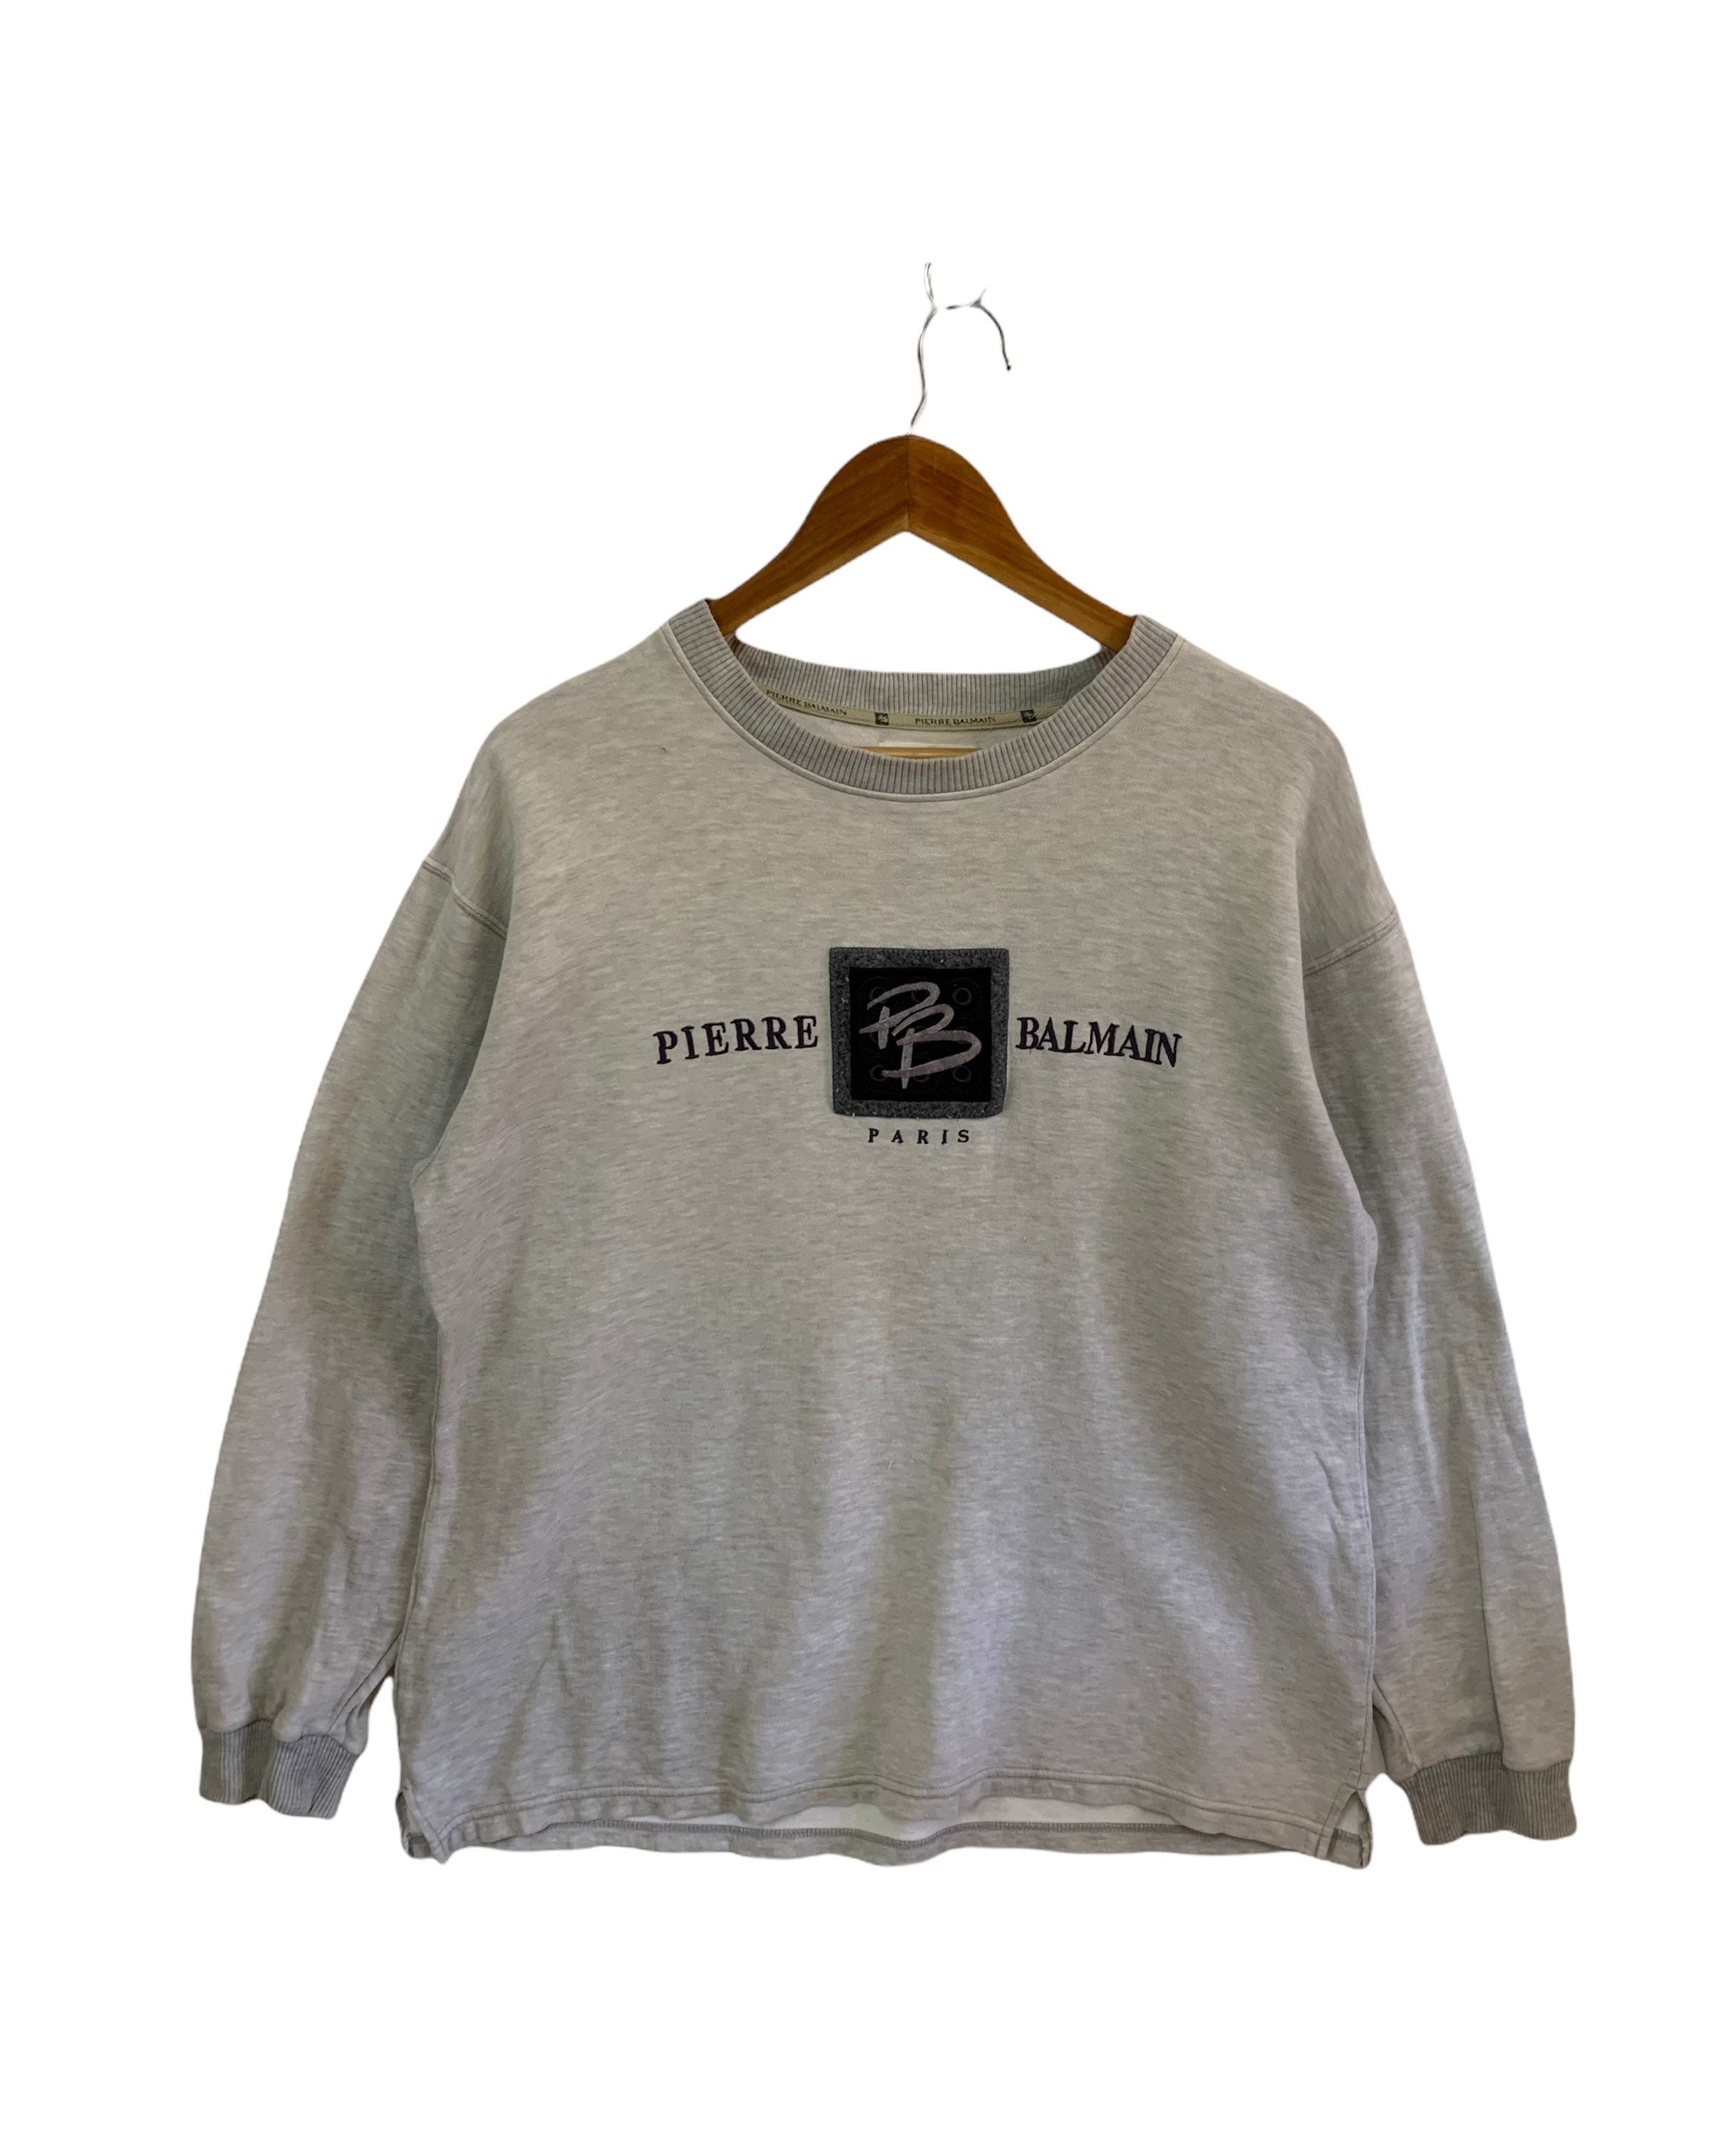 Vintage Pierre Balmain Paris Sweatshirt Big Spellout - Etsy Denmark